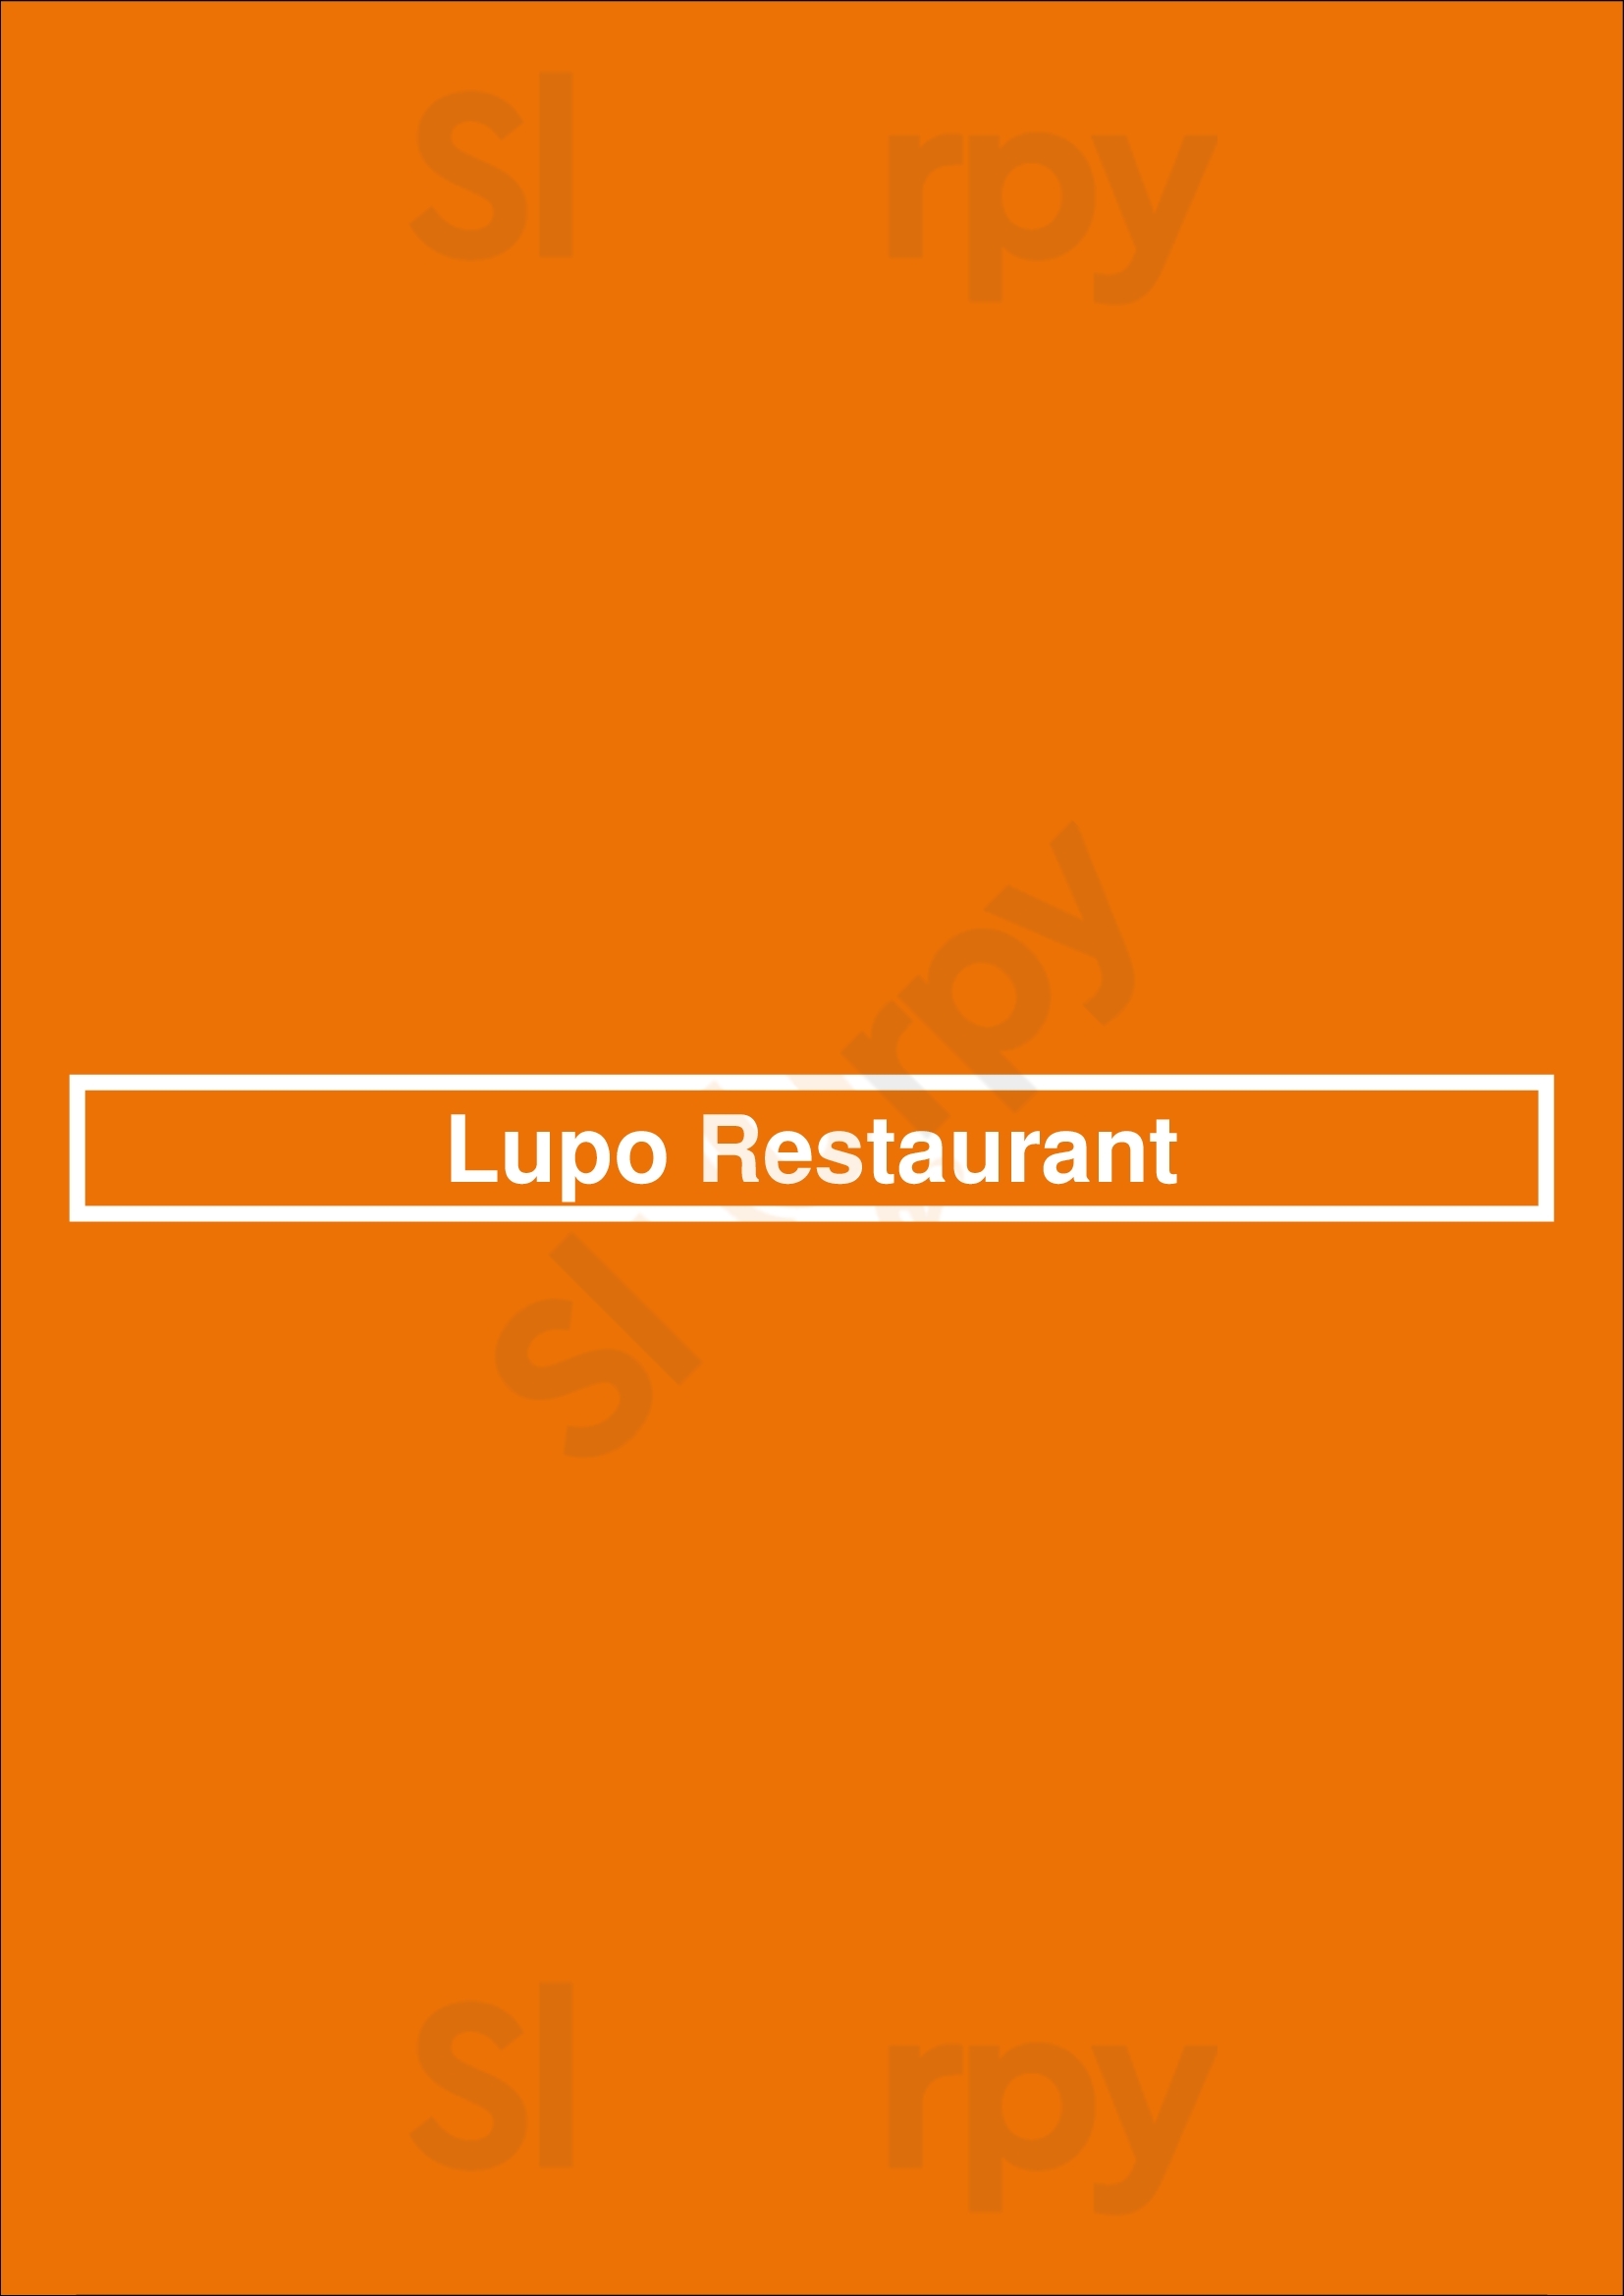 Lupo Restaurant Vancouver Menu - 1